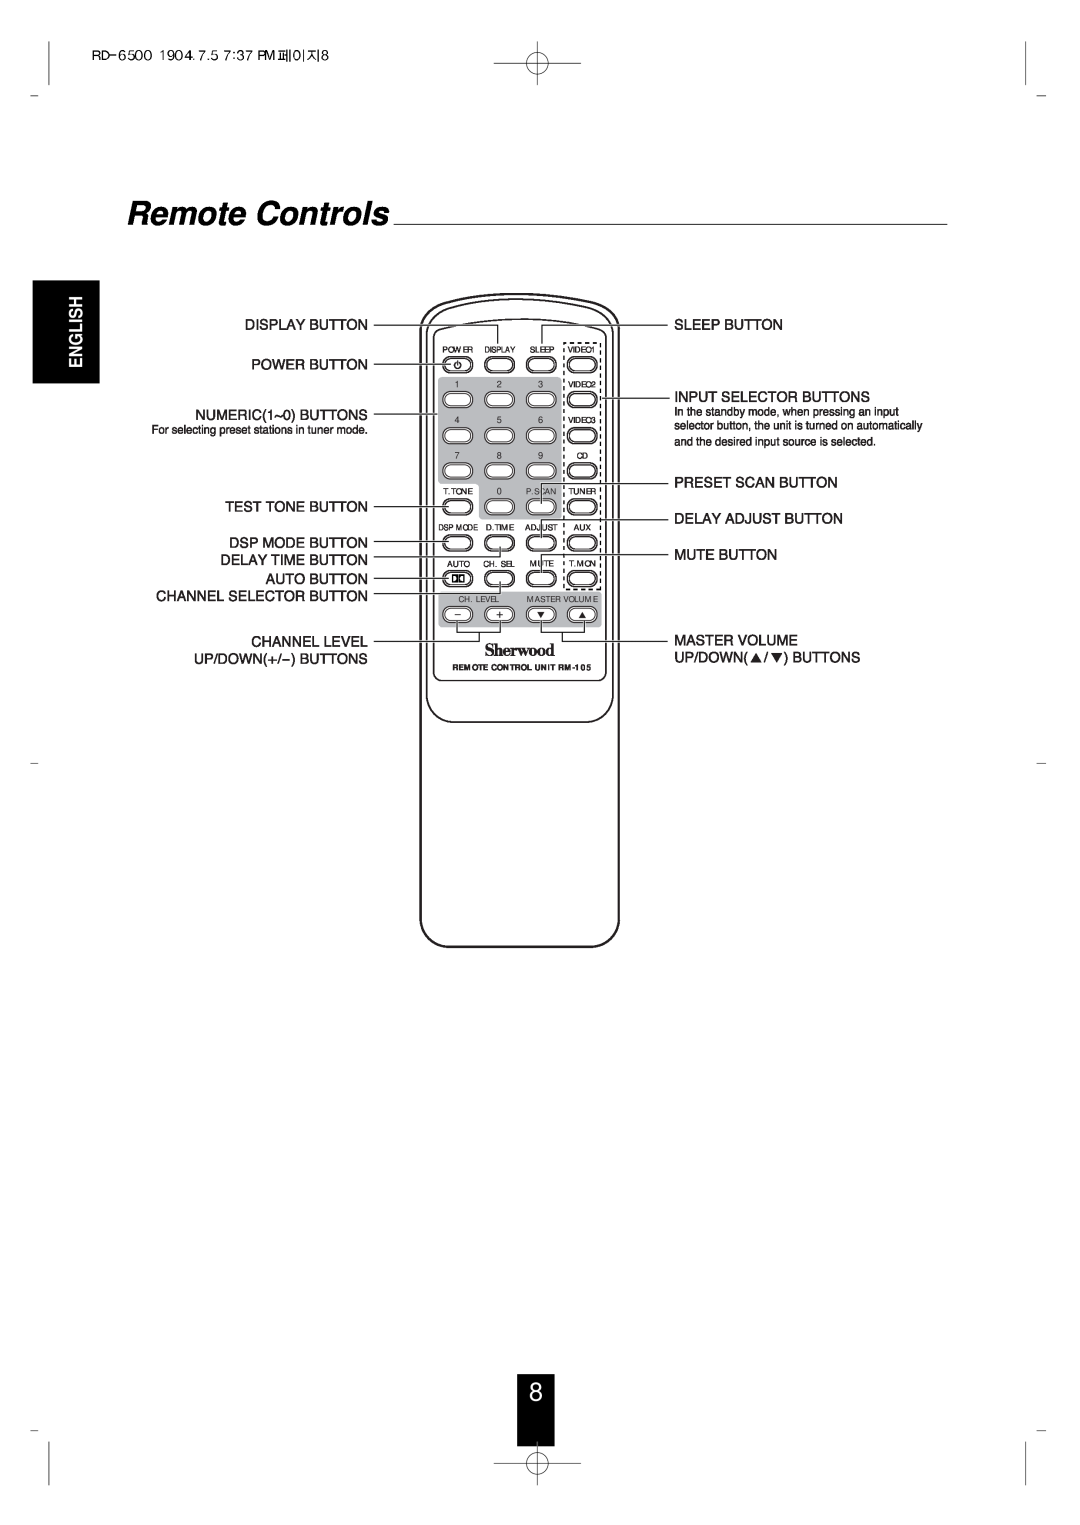 Sherwood RD-6500 manual Remote Controls, English 